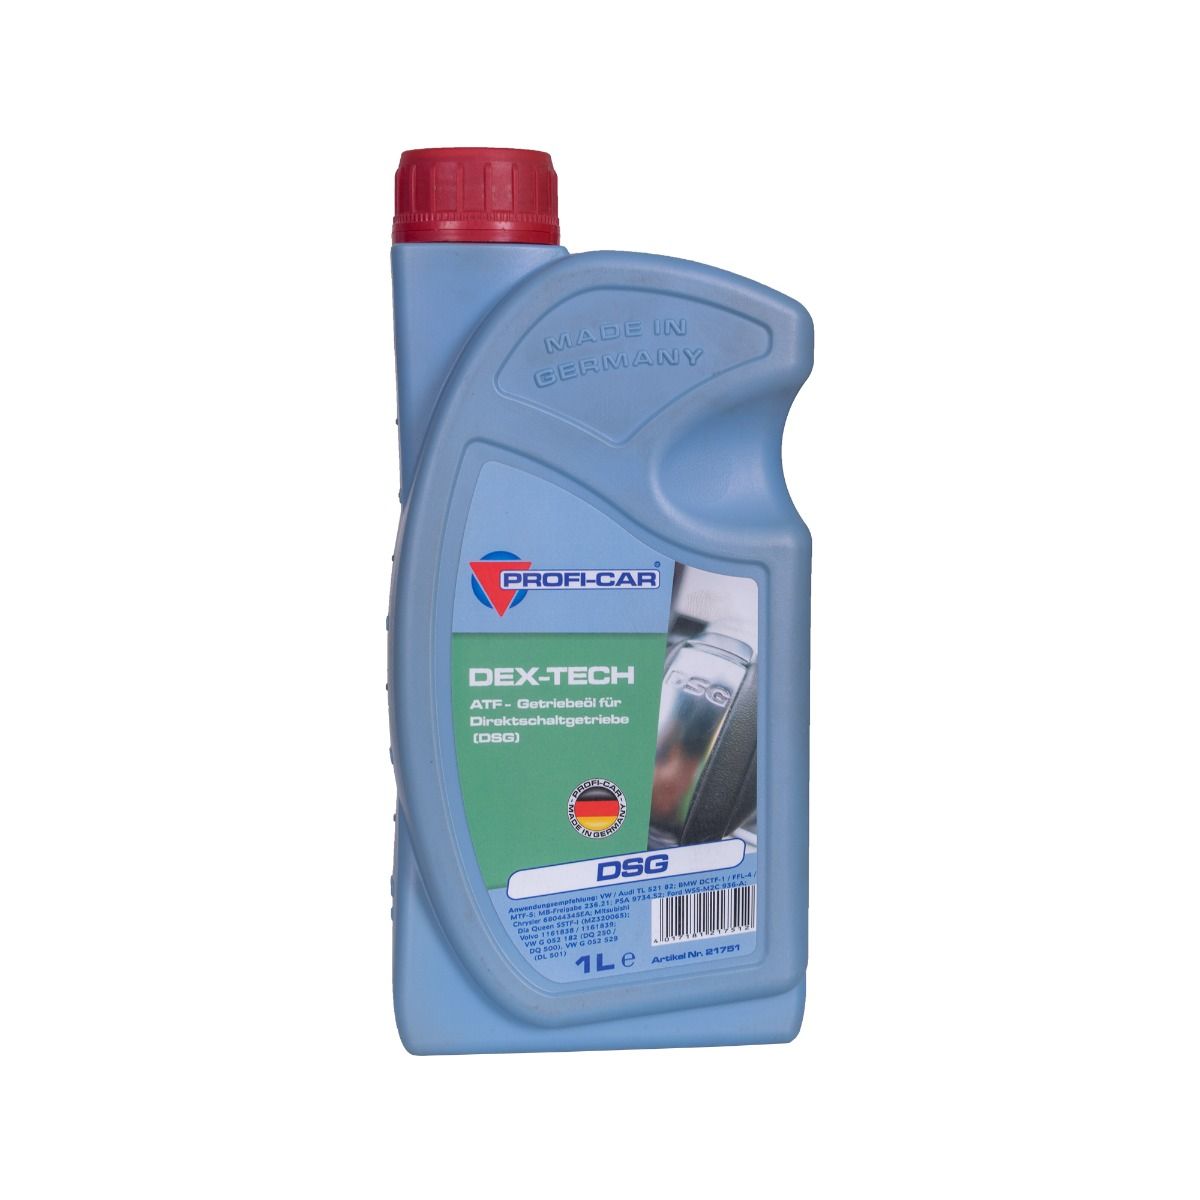 PROFI-CAR – Produit – PROFI-CAR Diesel system cleaner, 250 ml